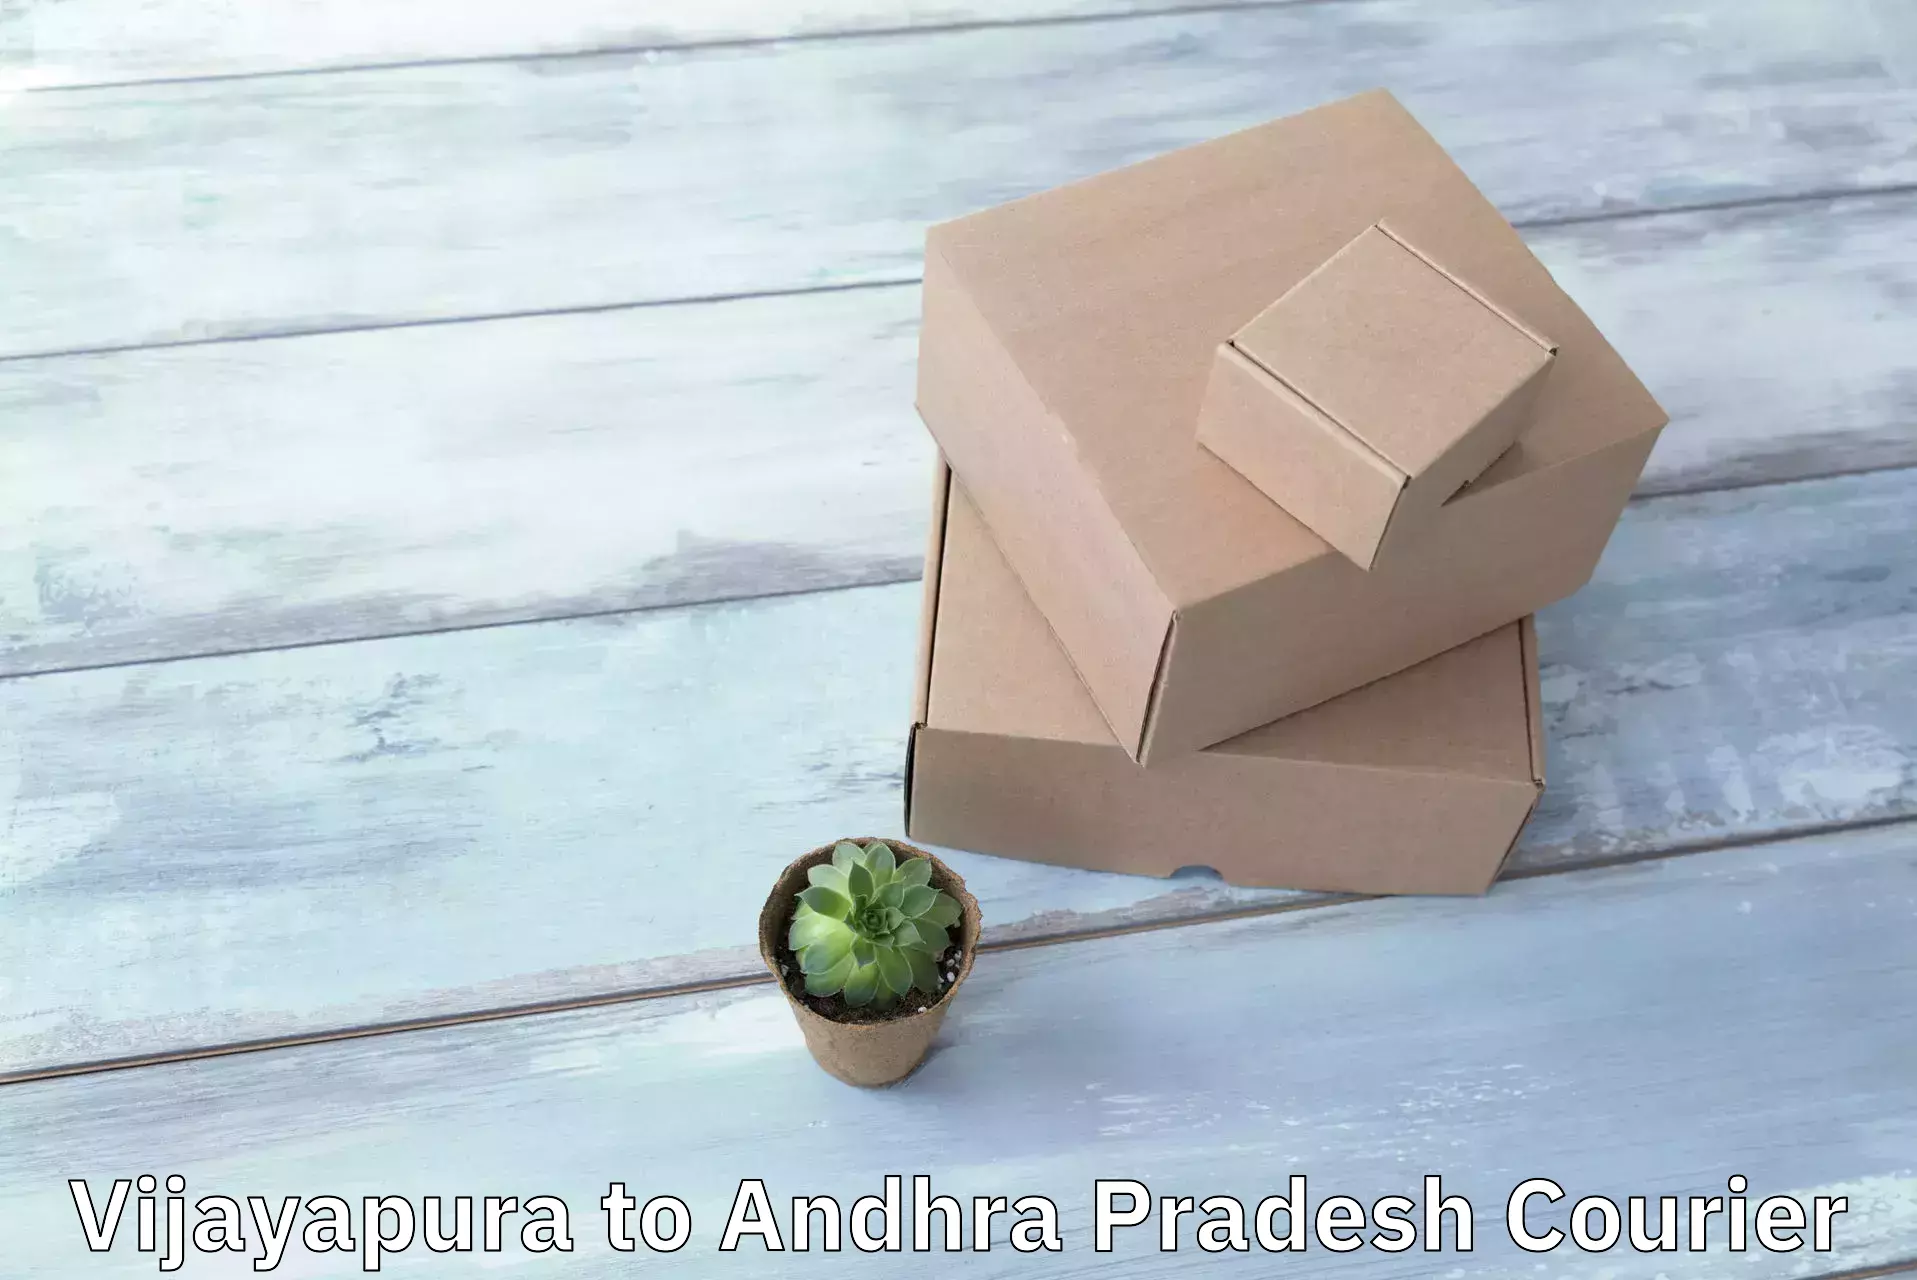 Modern courier technology Vijayapura to Andhra Pradesh